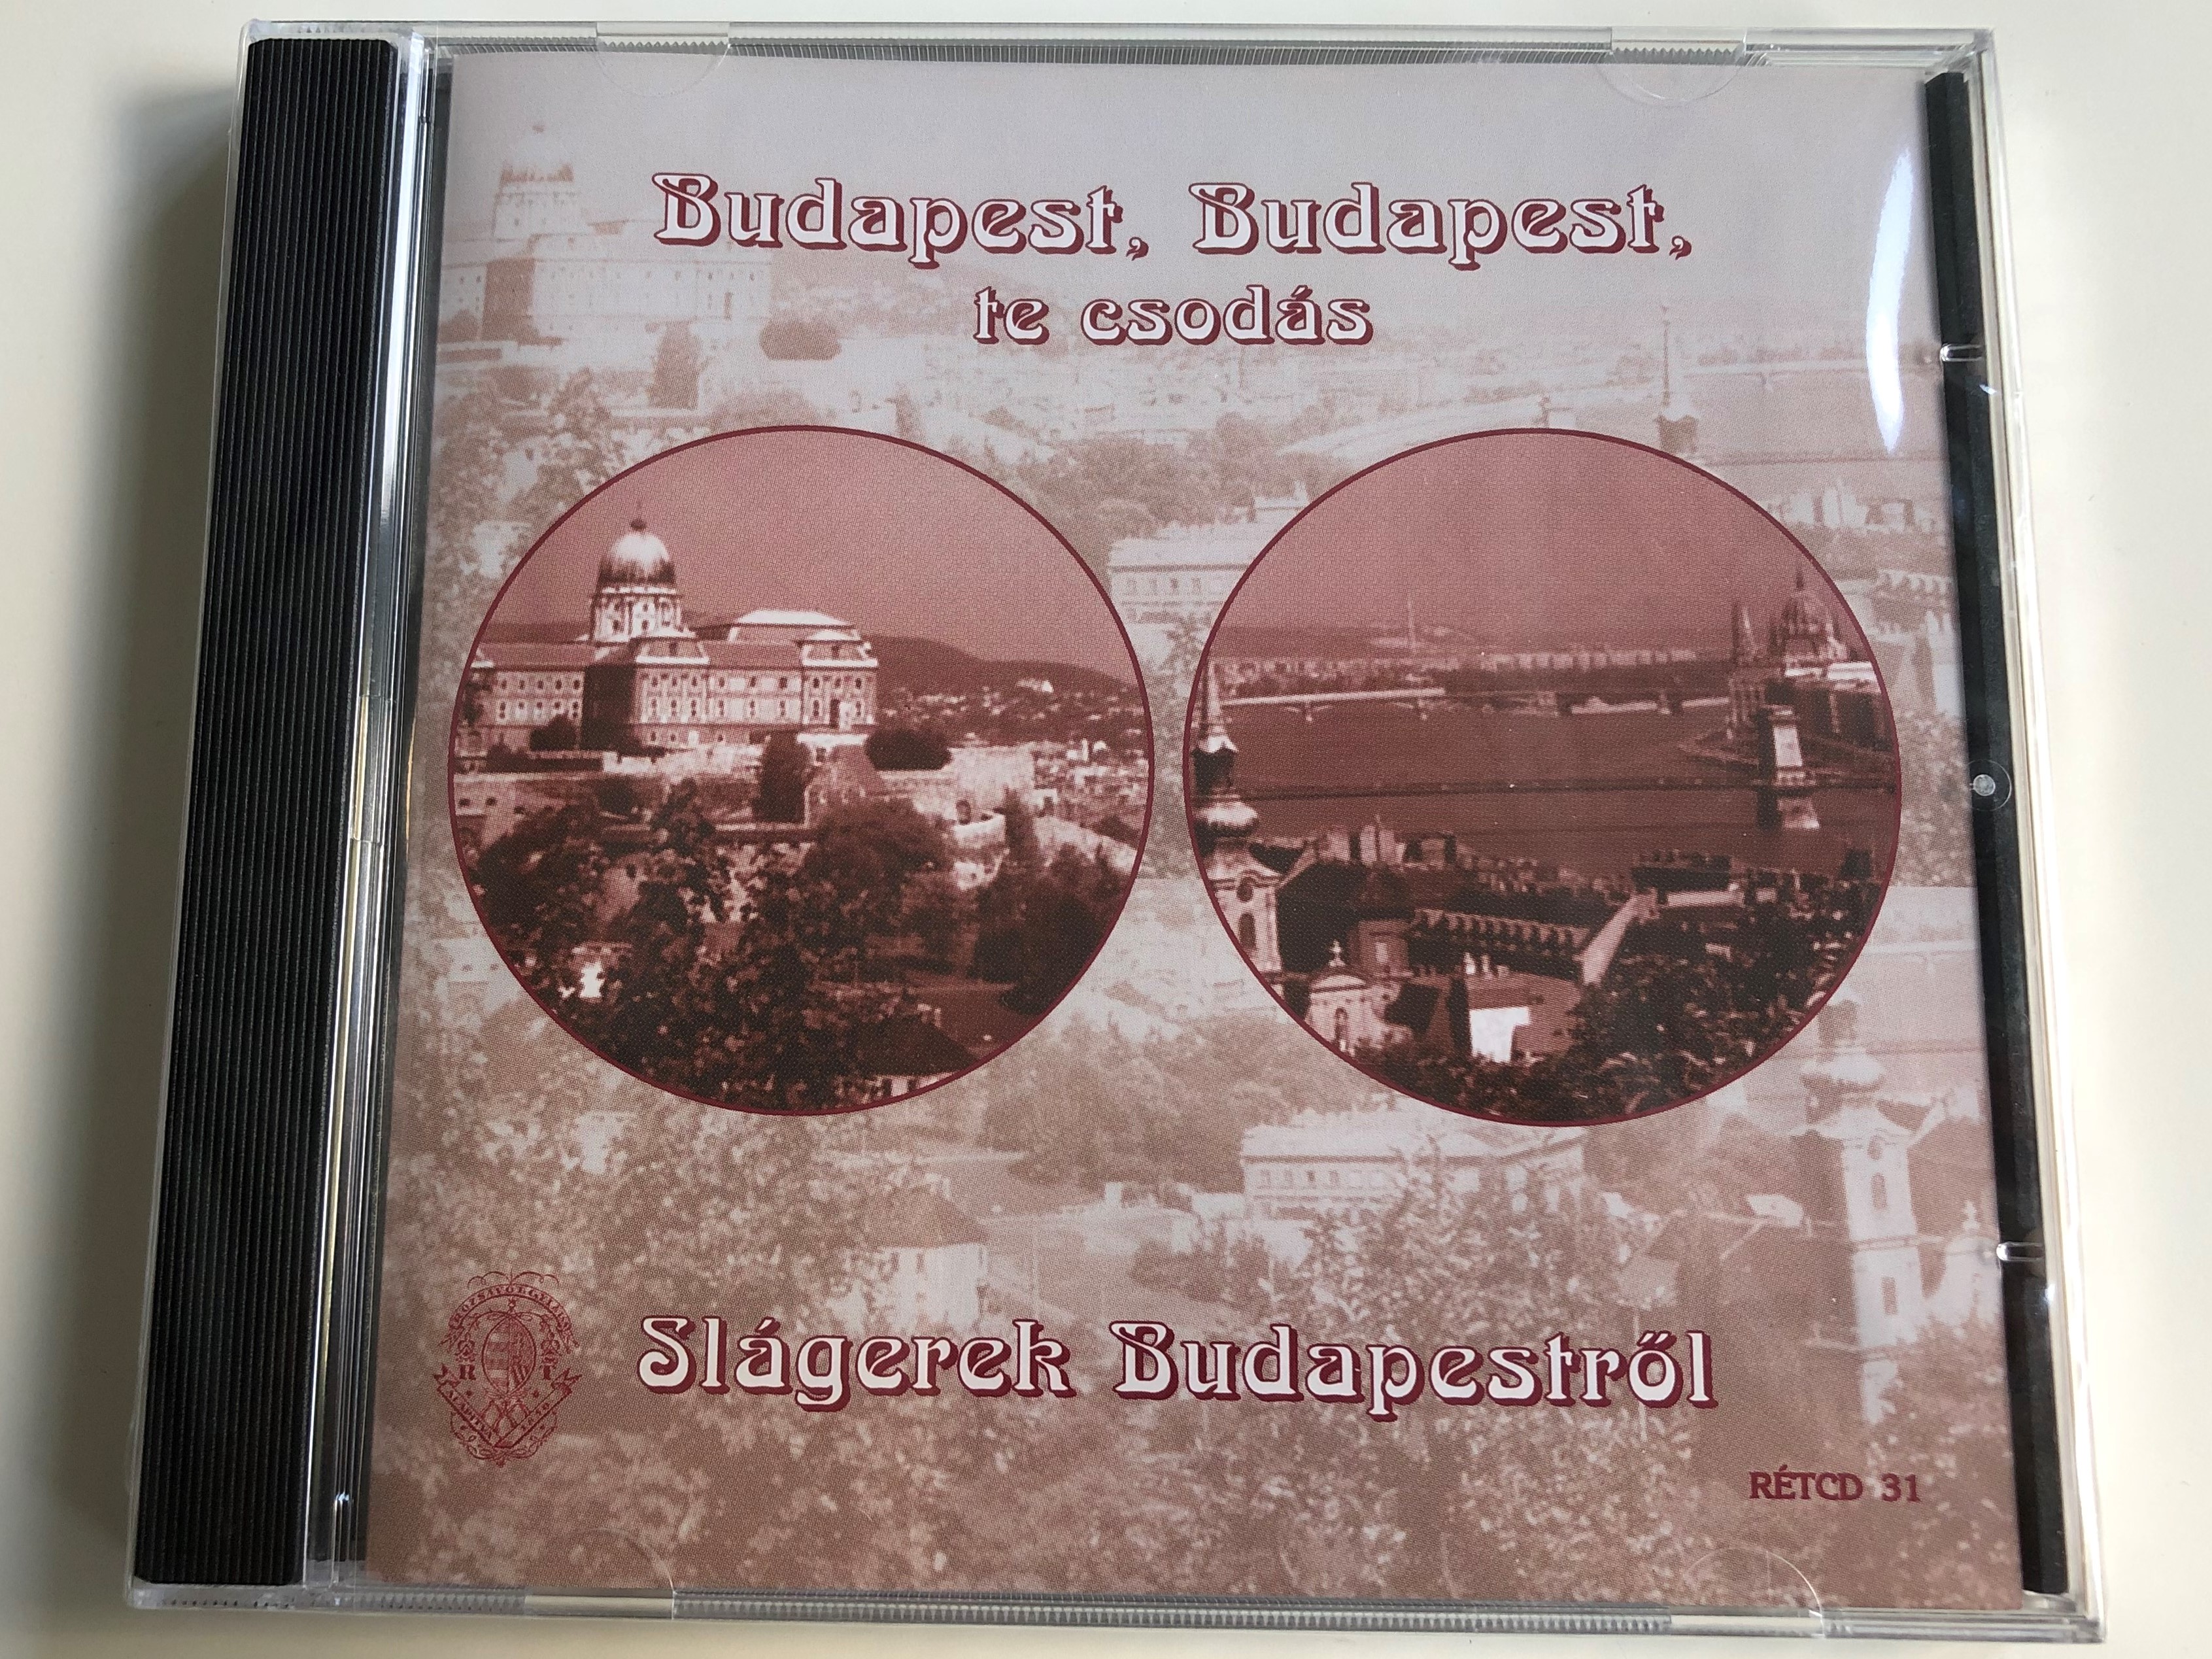 budapest-budapest-te-esodas-slagerek-budapestrol-r-zsav-lgyi-s-t-rsa-audio-cd-2003-r-tcd-31-1-.jpg